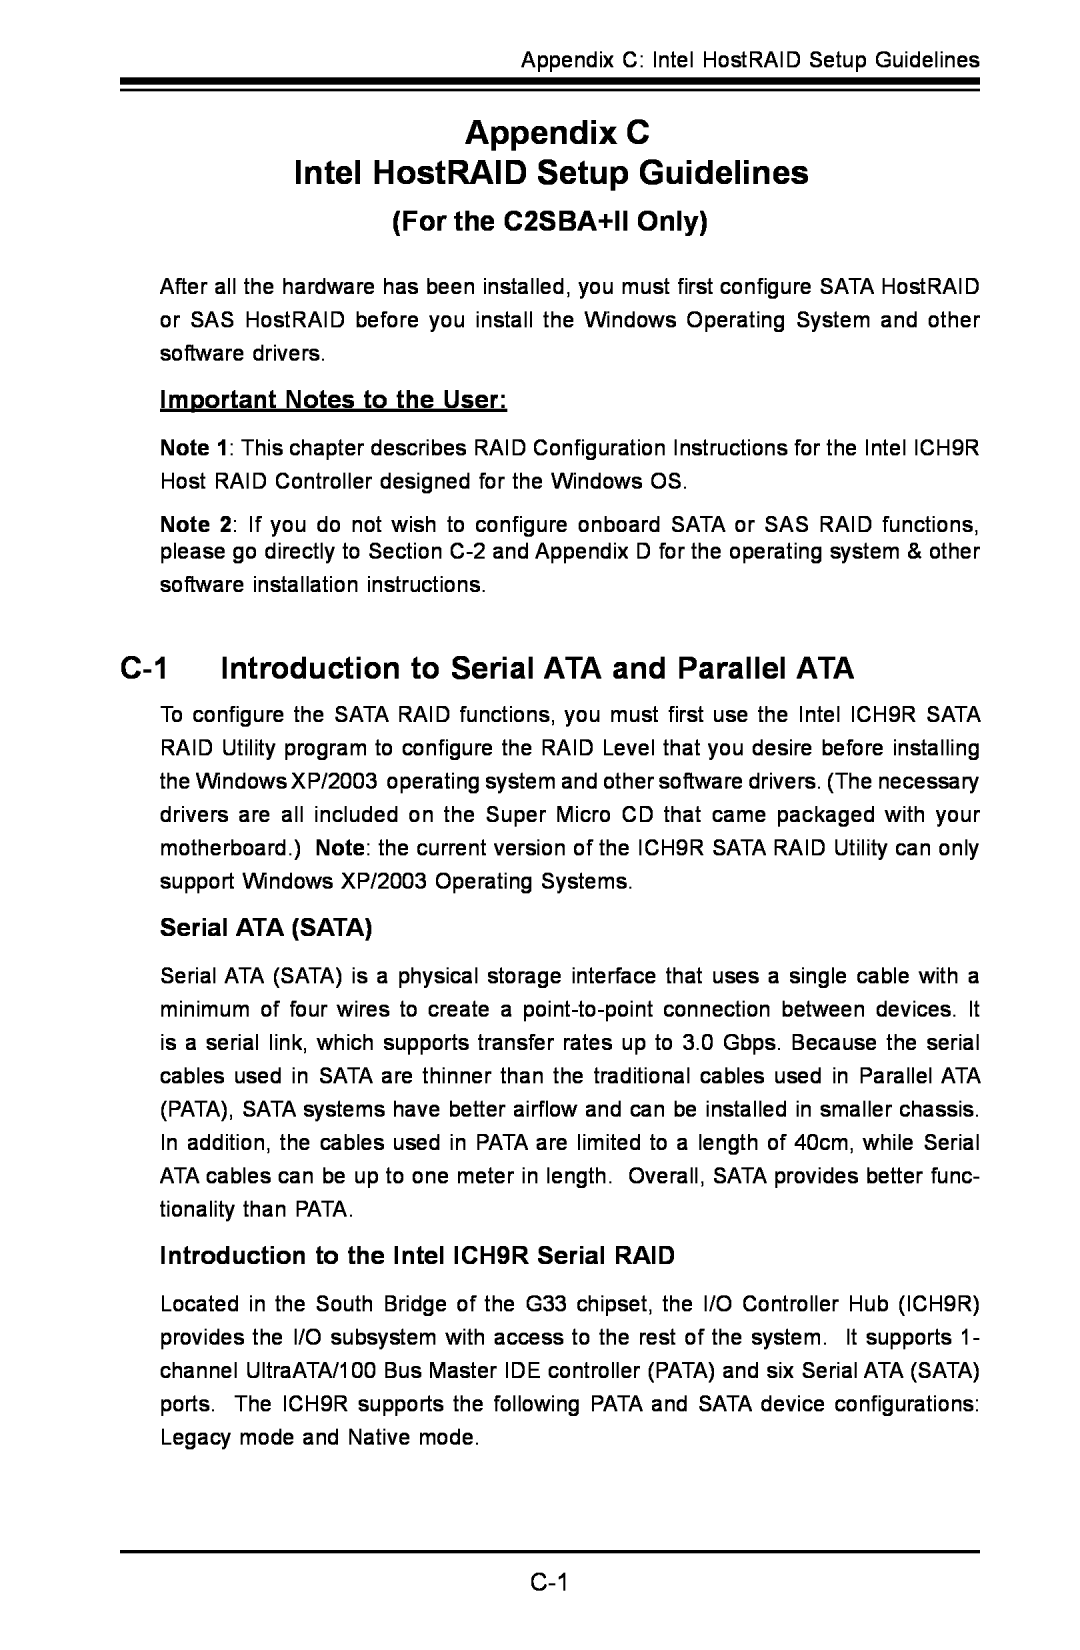 SUPER MICRO Computer C2SBA+II Appendix C Intel HostRAID Setup Guidelines, C-1 Introduction to Serial ATA and Parallel ATA 